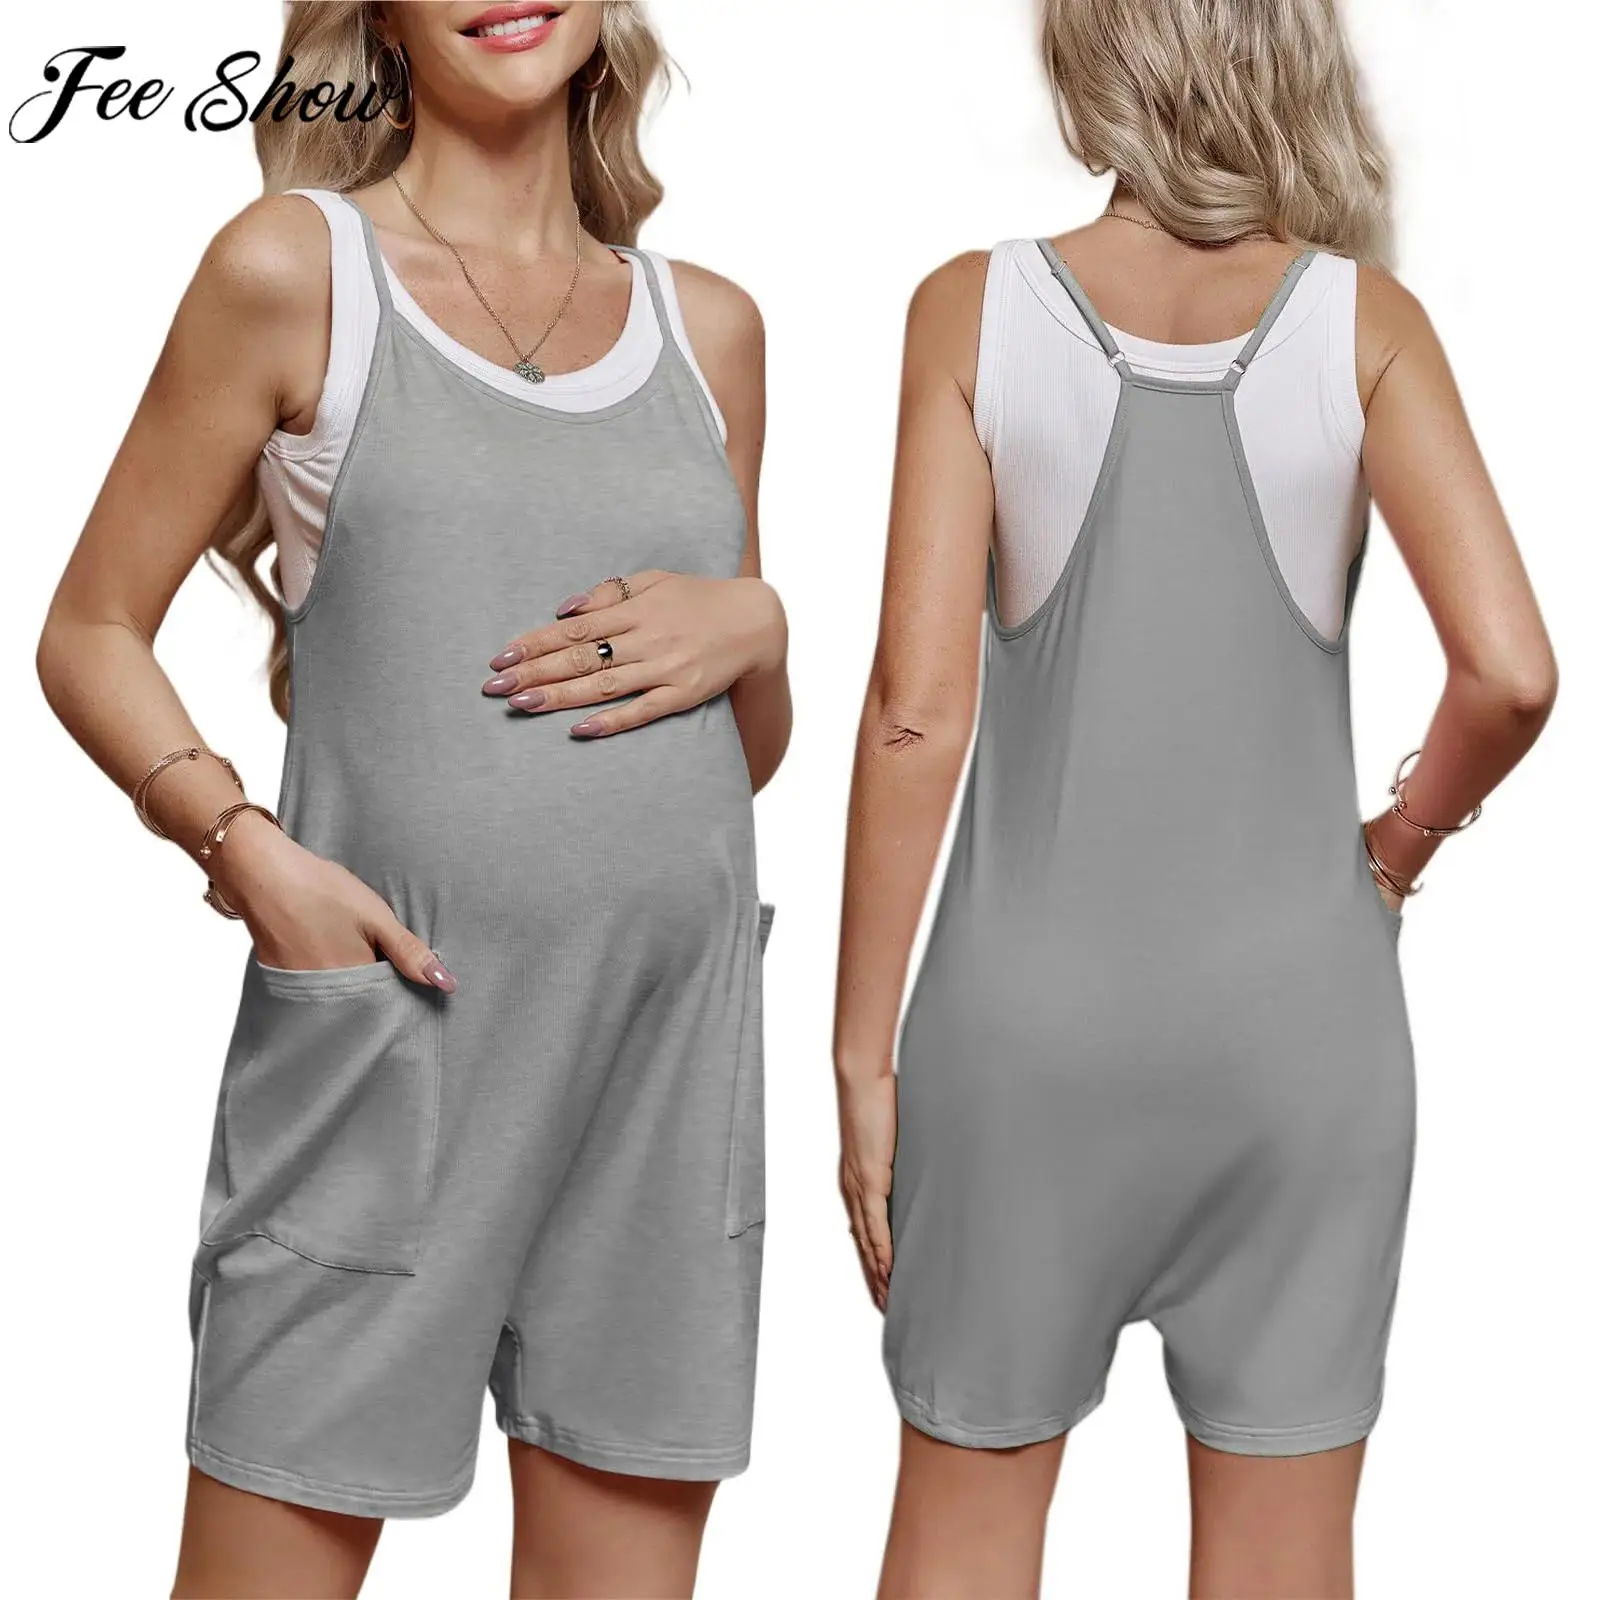 

Pregnant Women Summer Overalls Shorts Jumpsuit Sleeveless Stretchy Casual Bodysuit with Pocket Streetwear Sleepwear Homewear